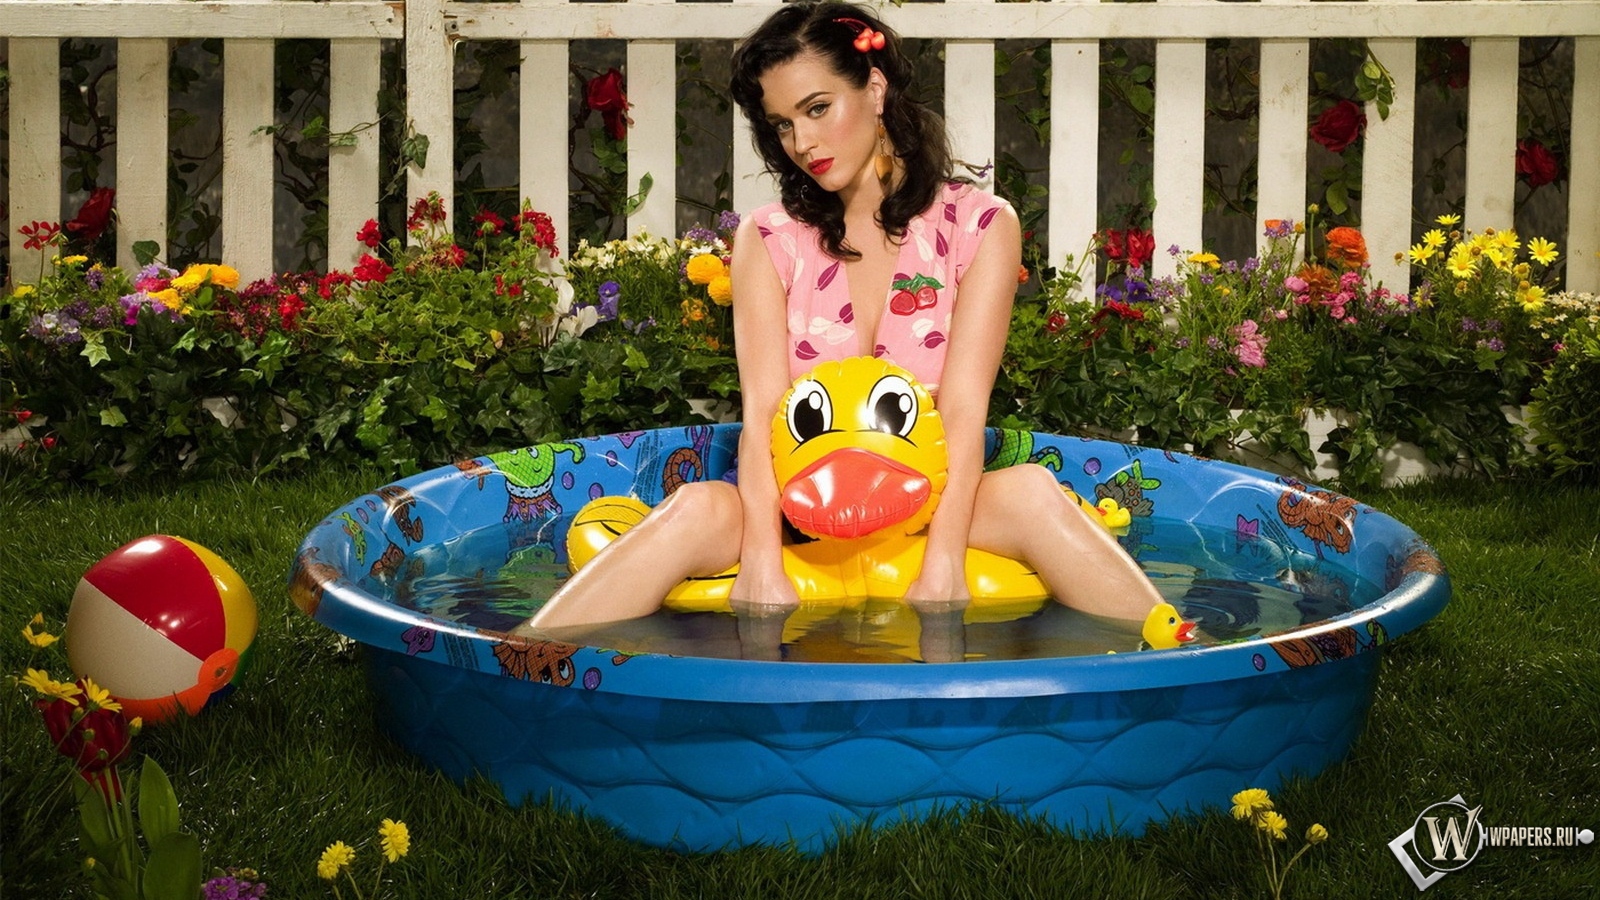 Katy Perry 1600x900